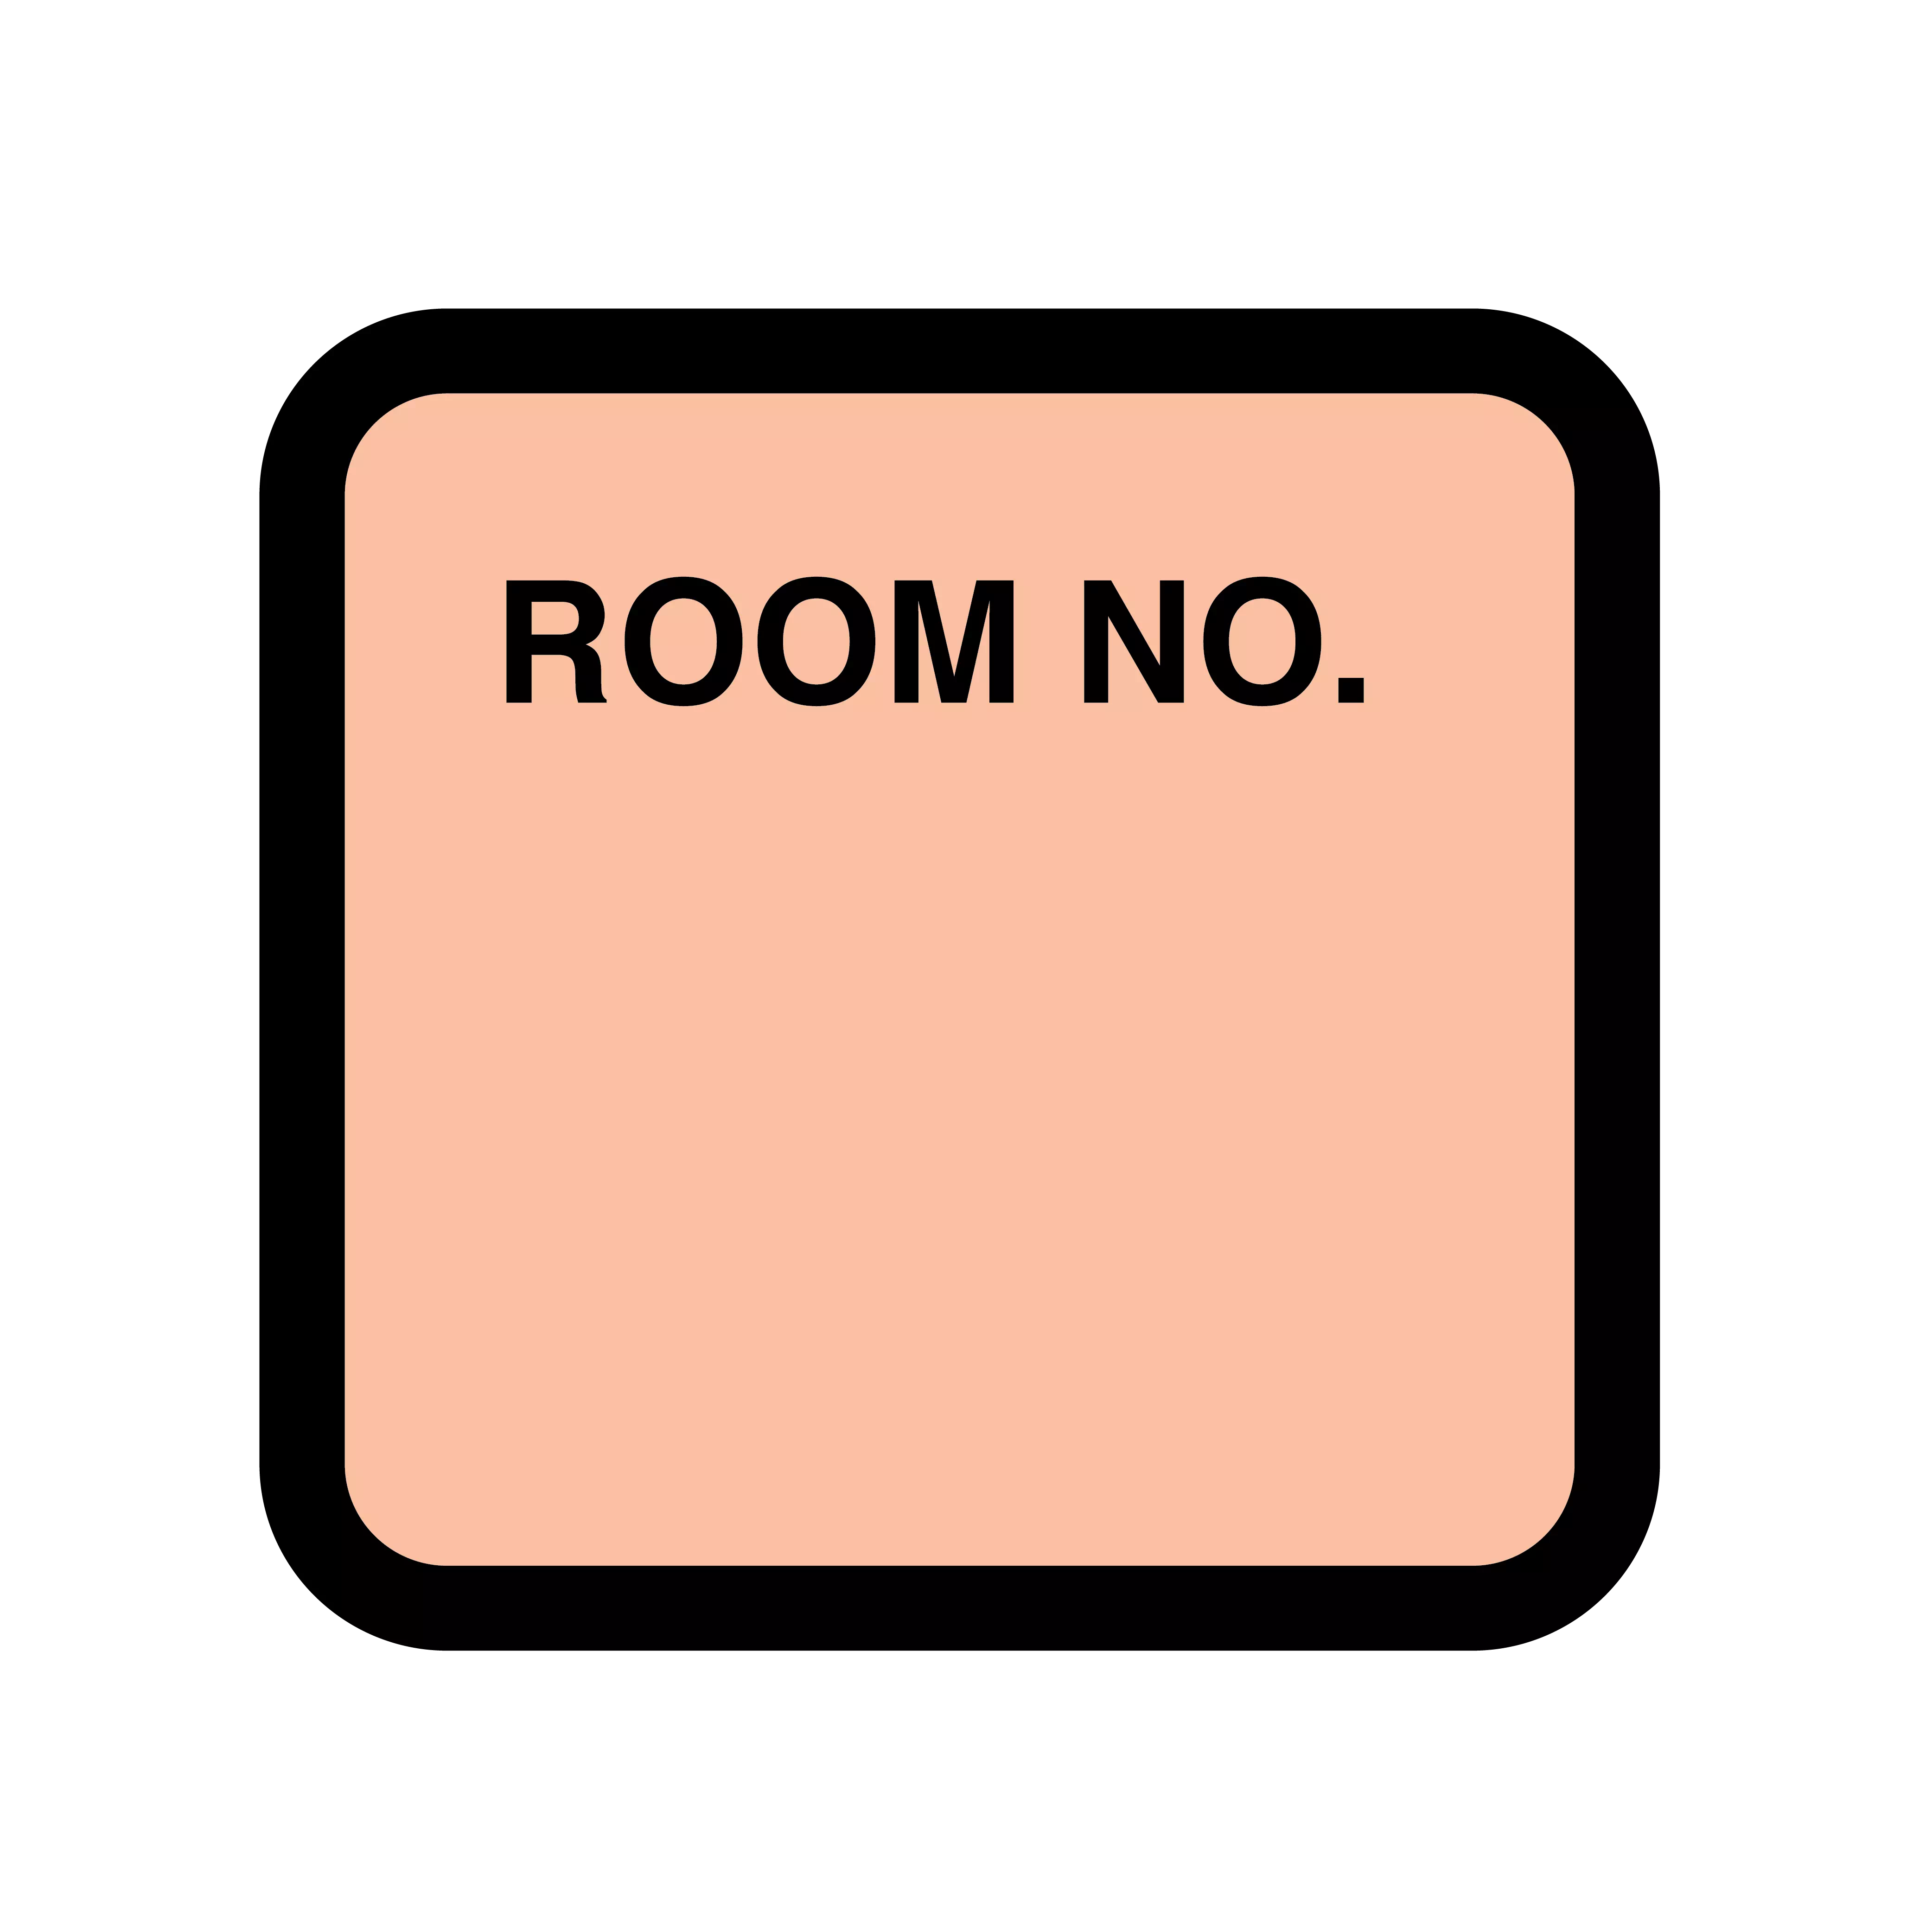 Printed Chart Labels - Room No